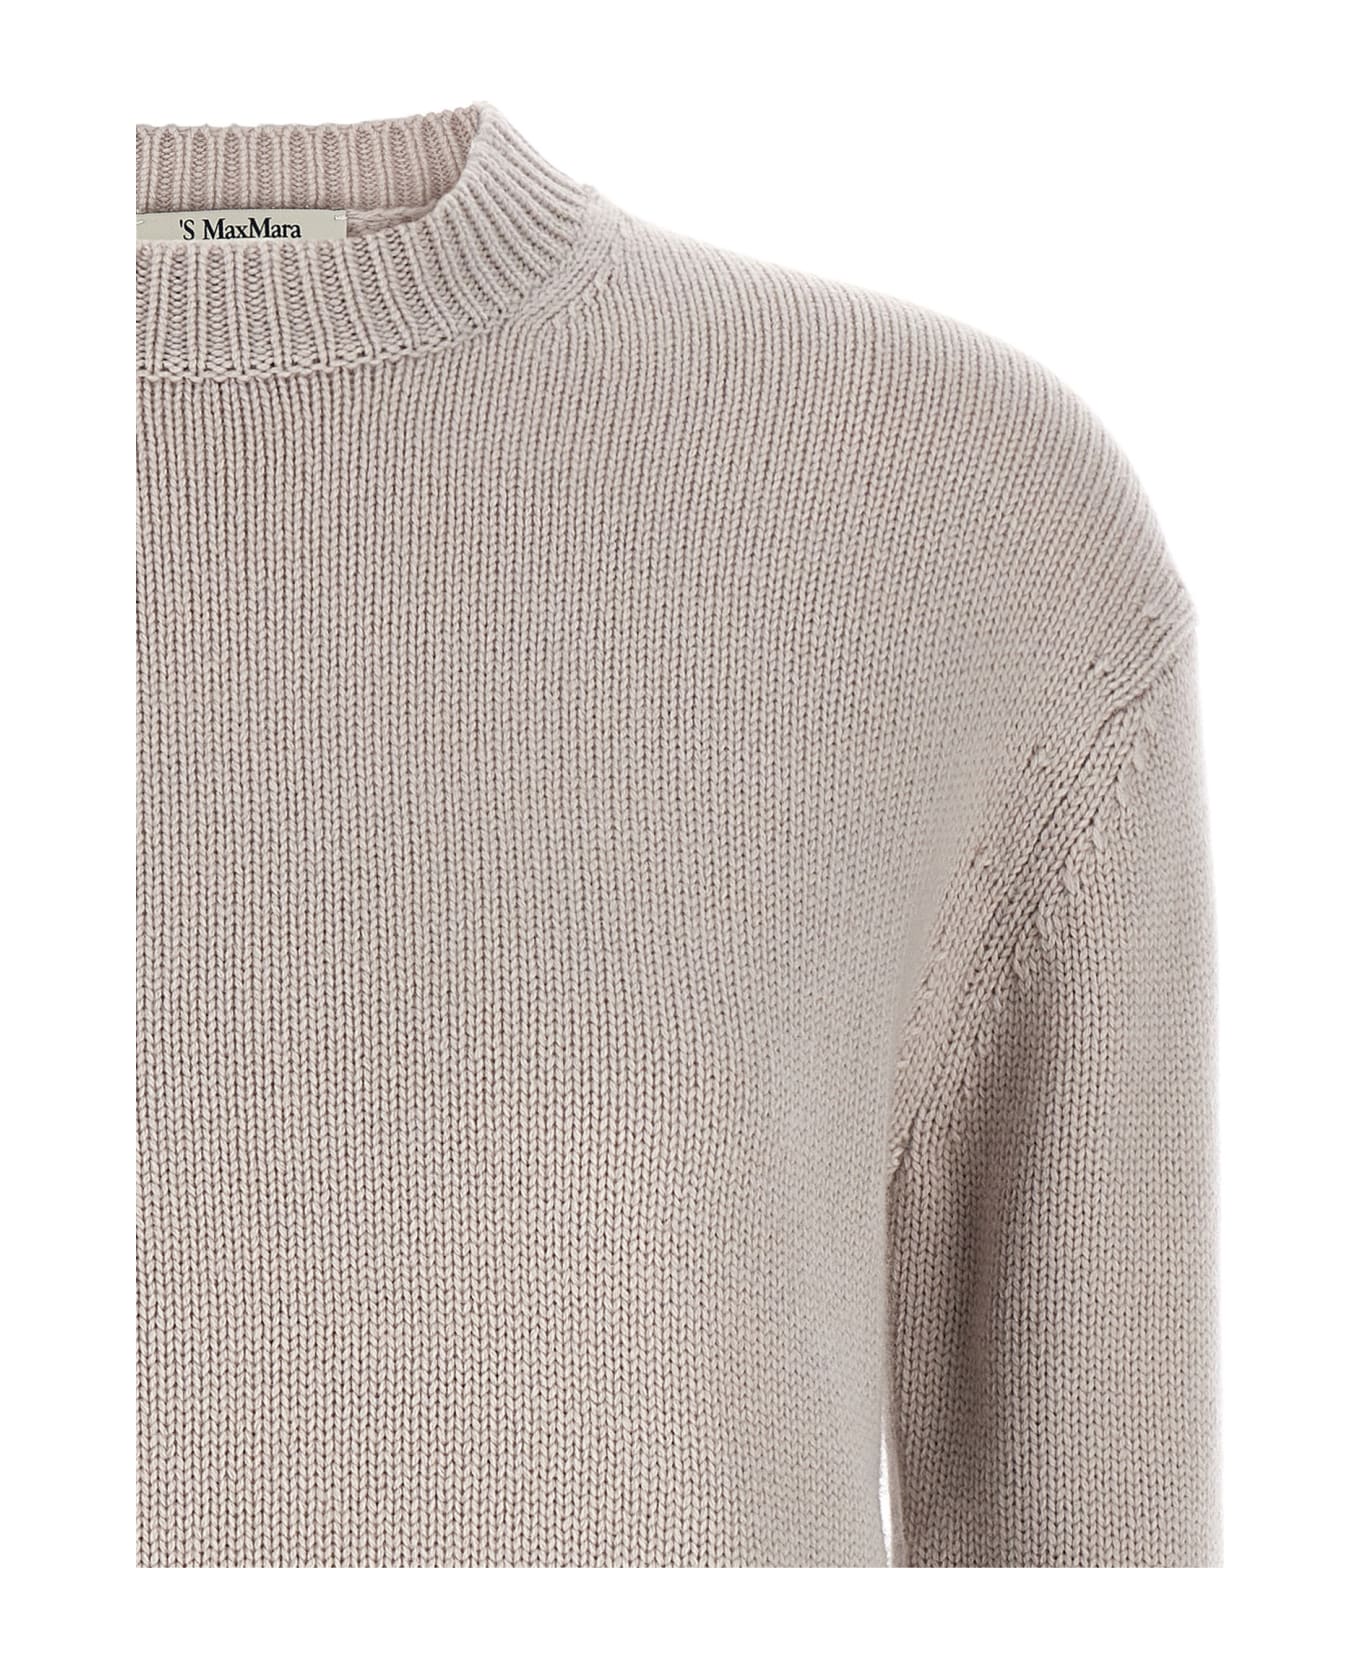 'S Max Mara 'irlanda' Sweater - Gray ニットウェア